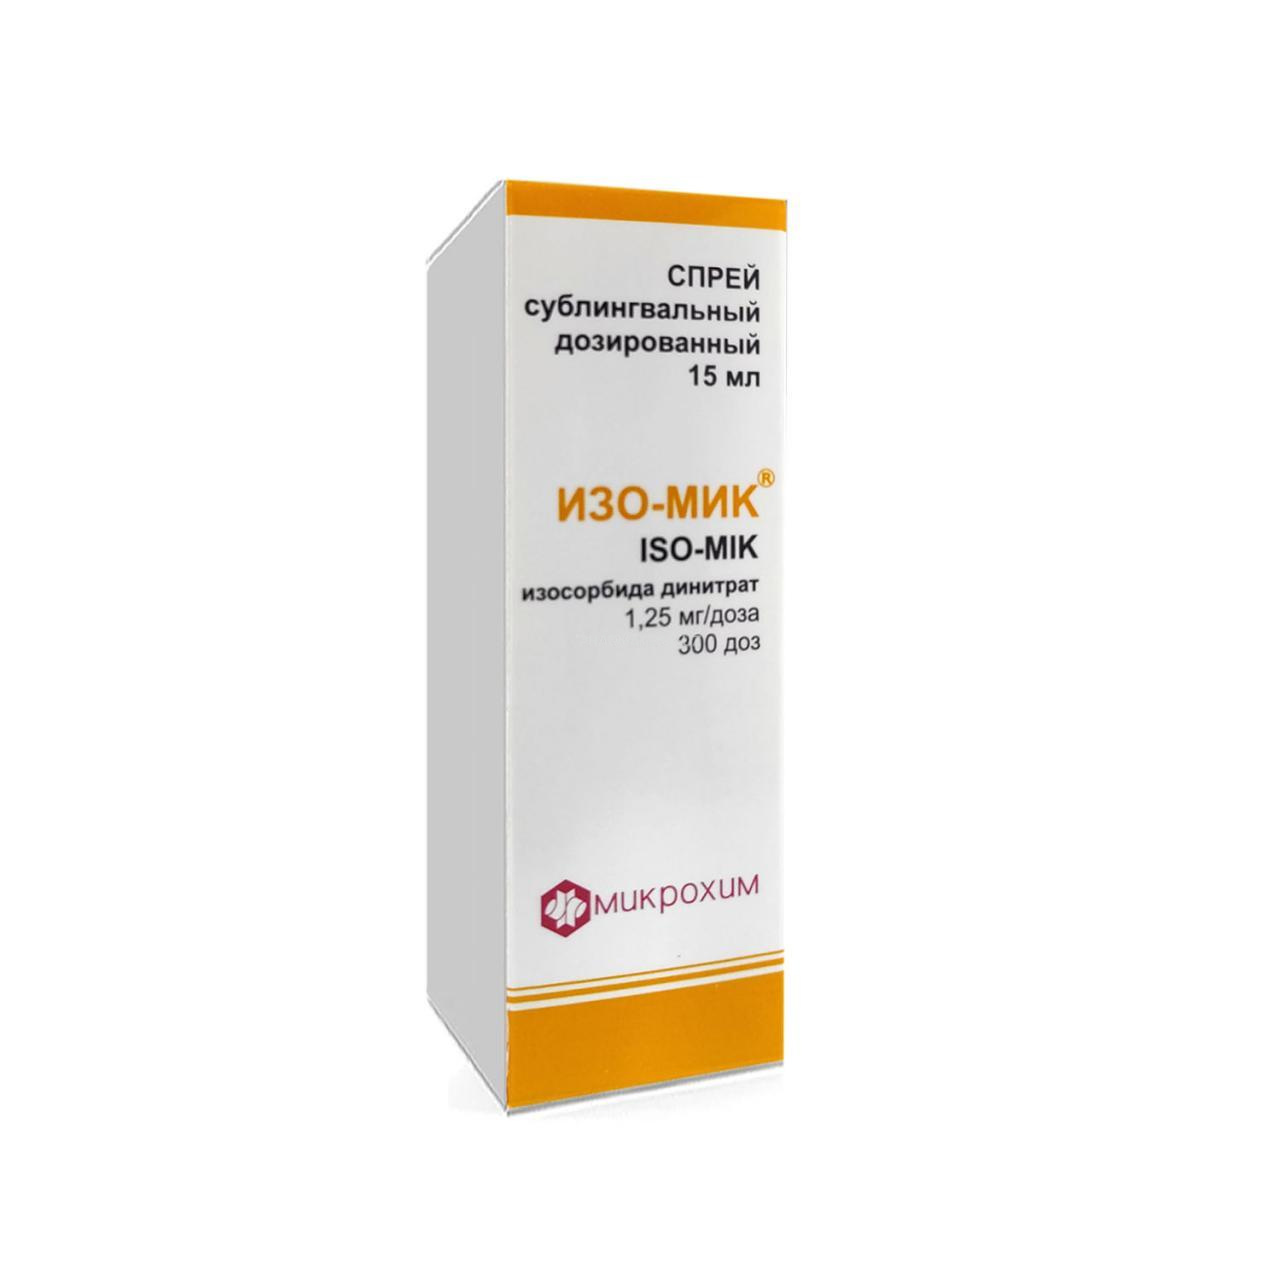 Izo-Mik sprey 1,25 mg / doza 300 doz 15ml